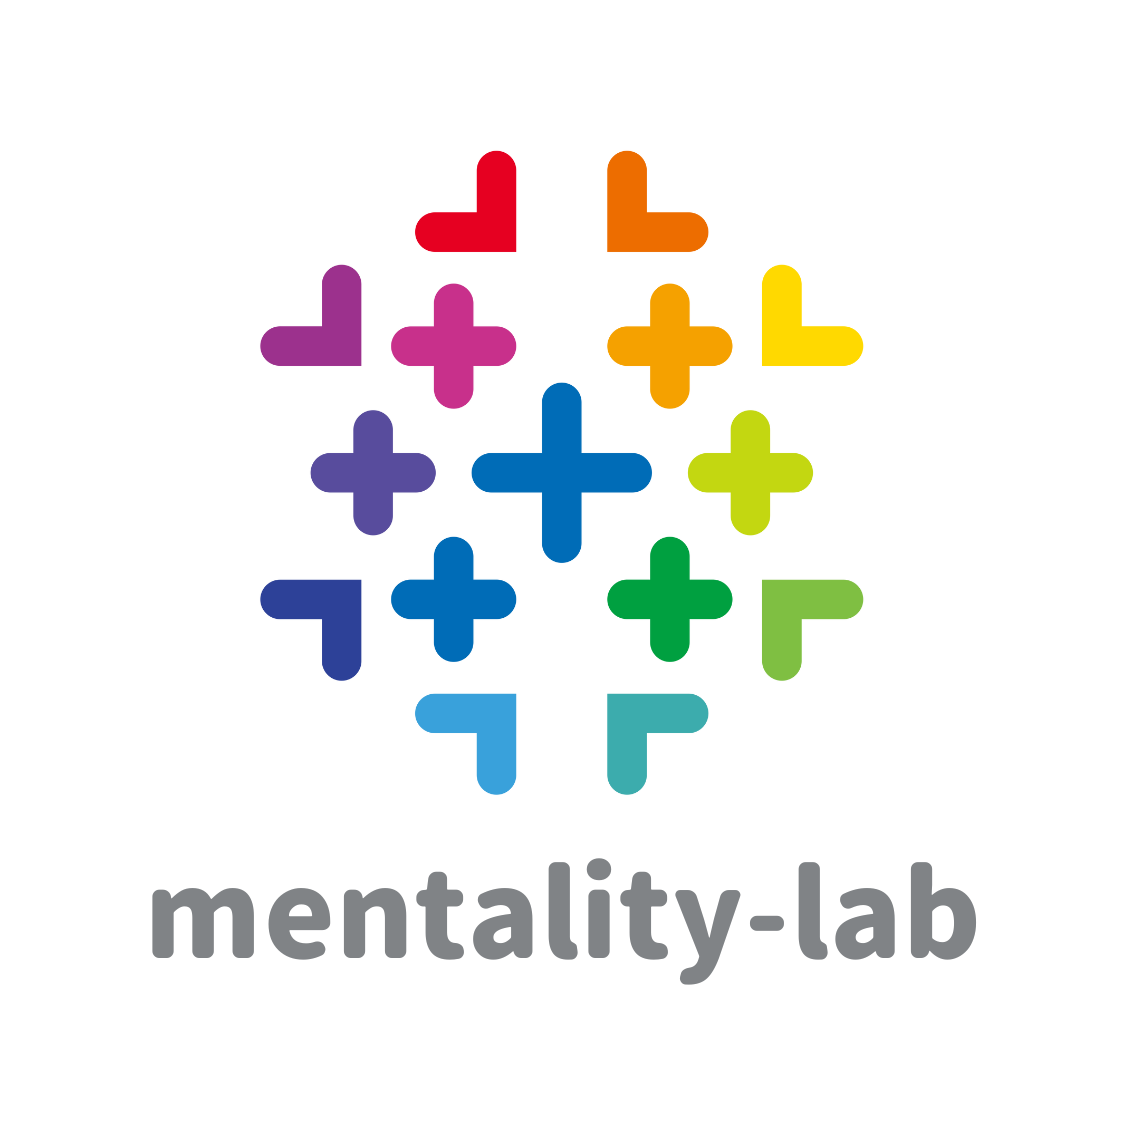 mentality-lab